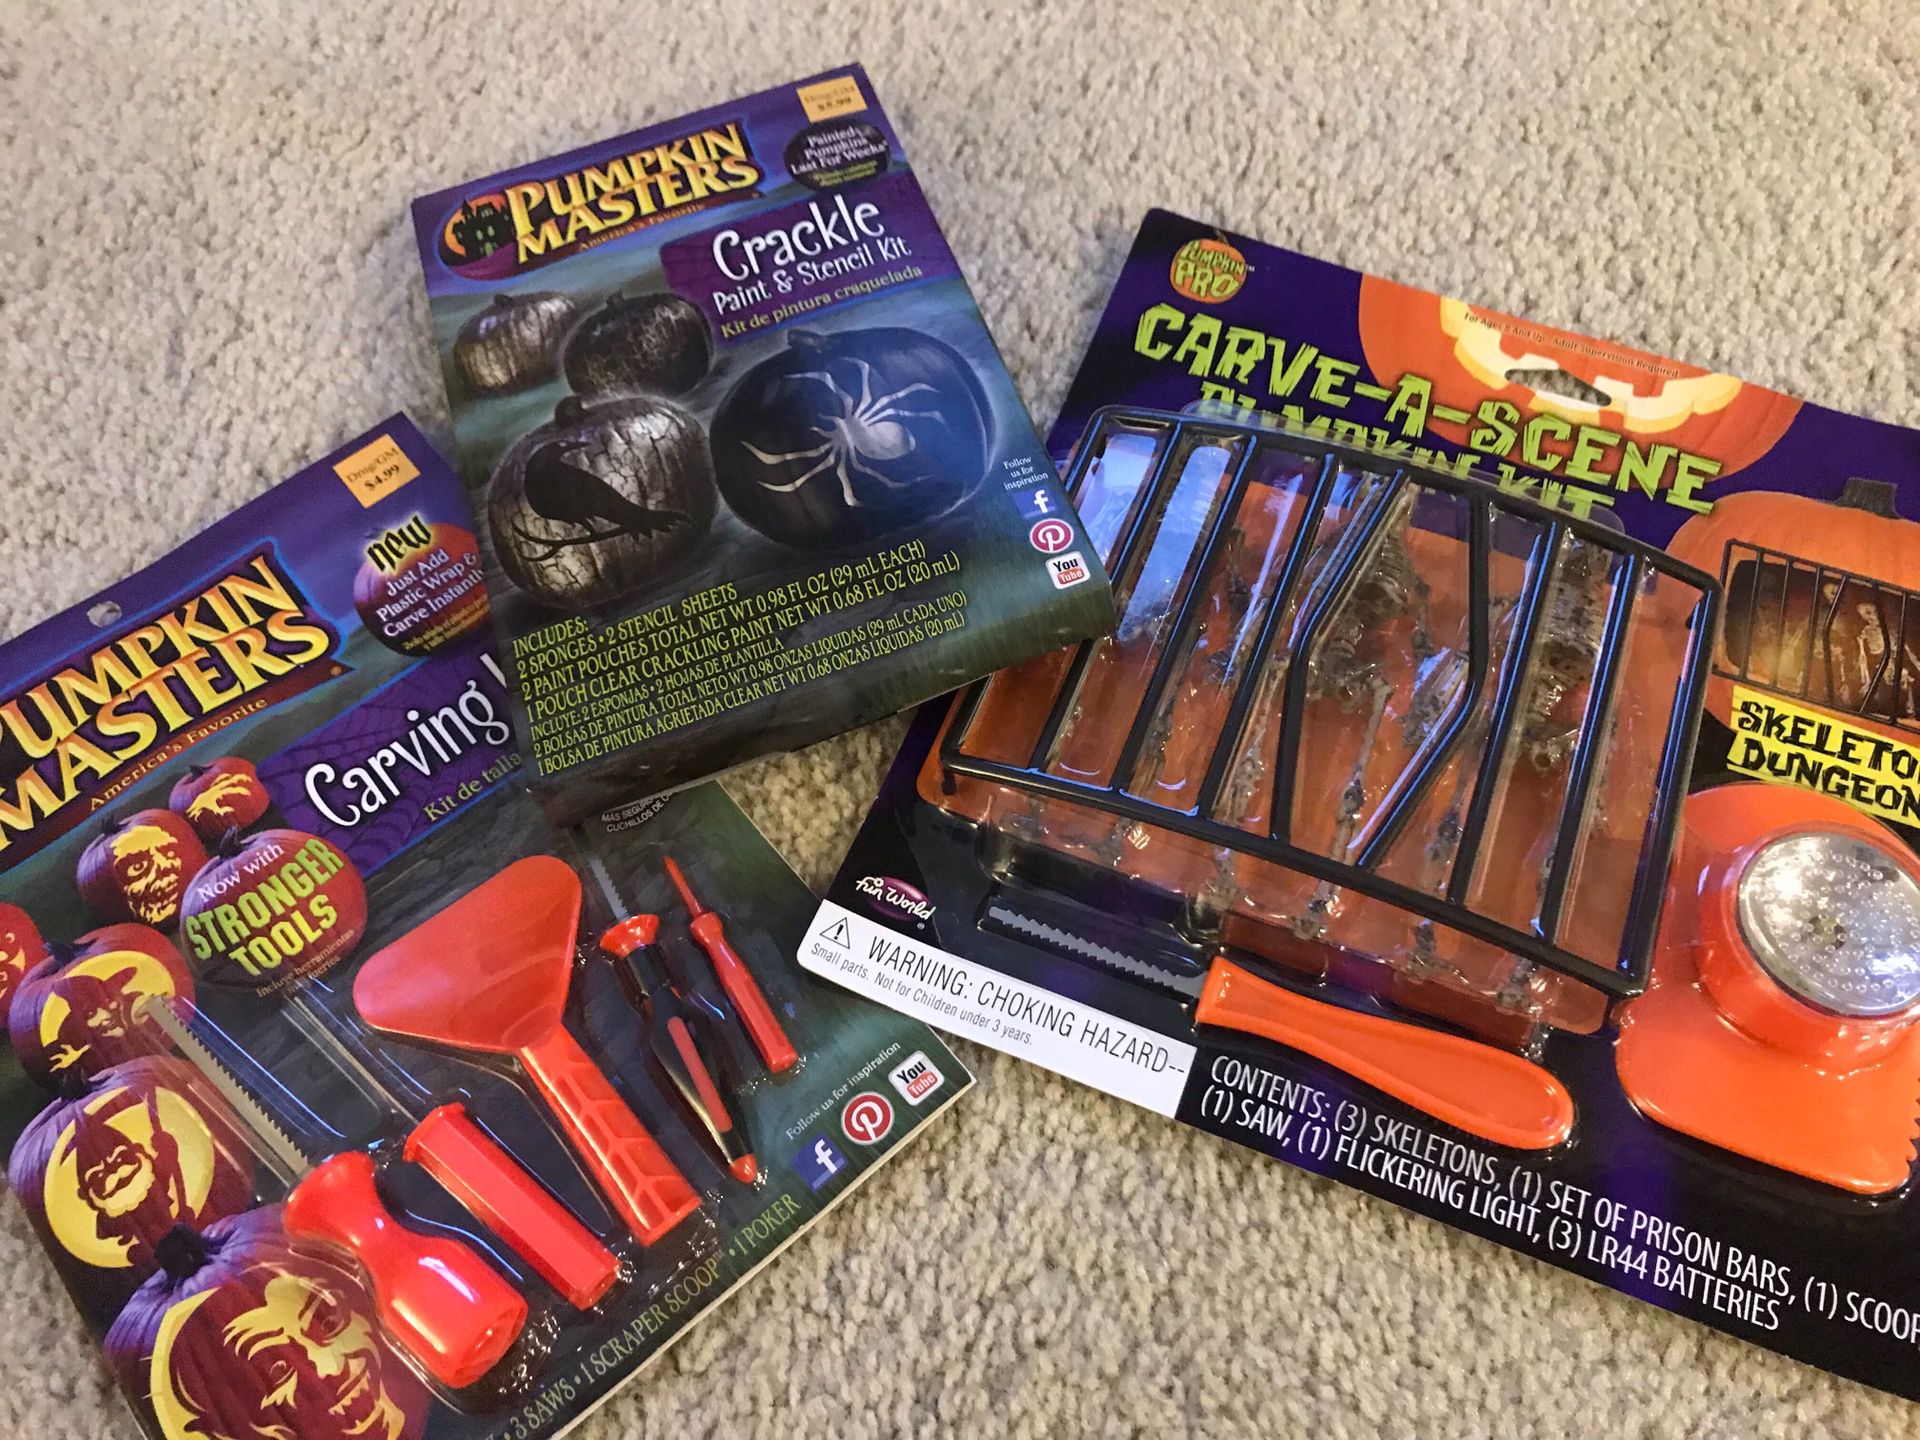 Halloween pumpkin carving kits